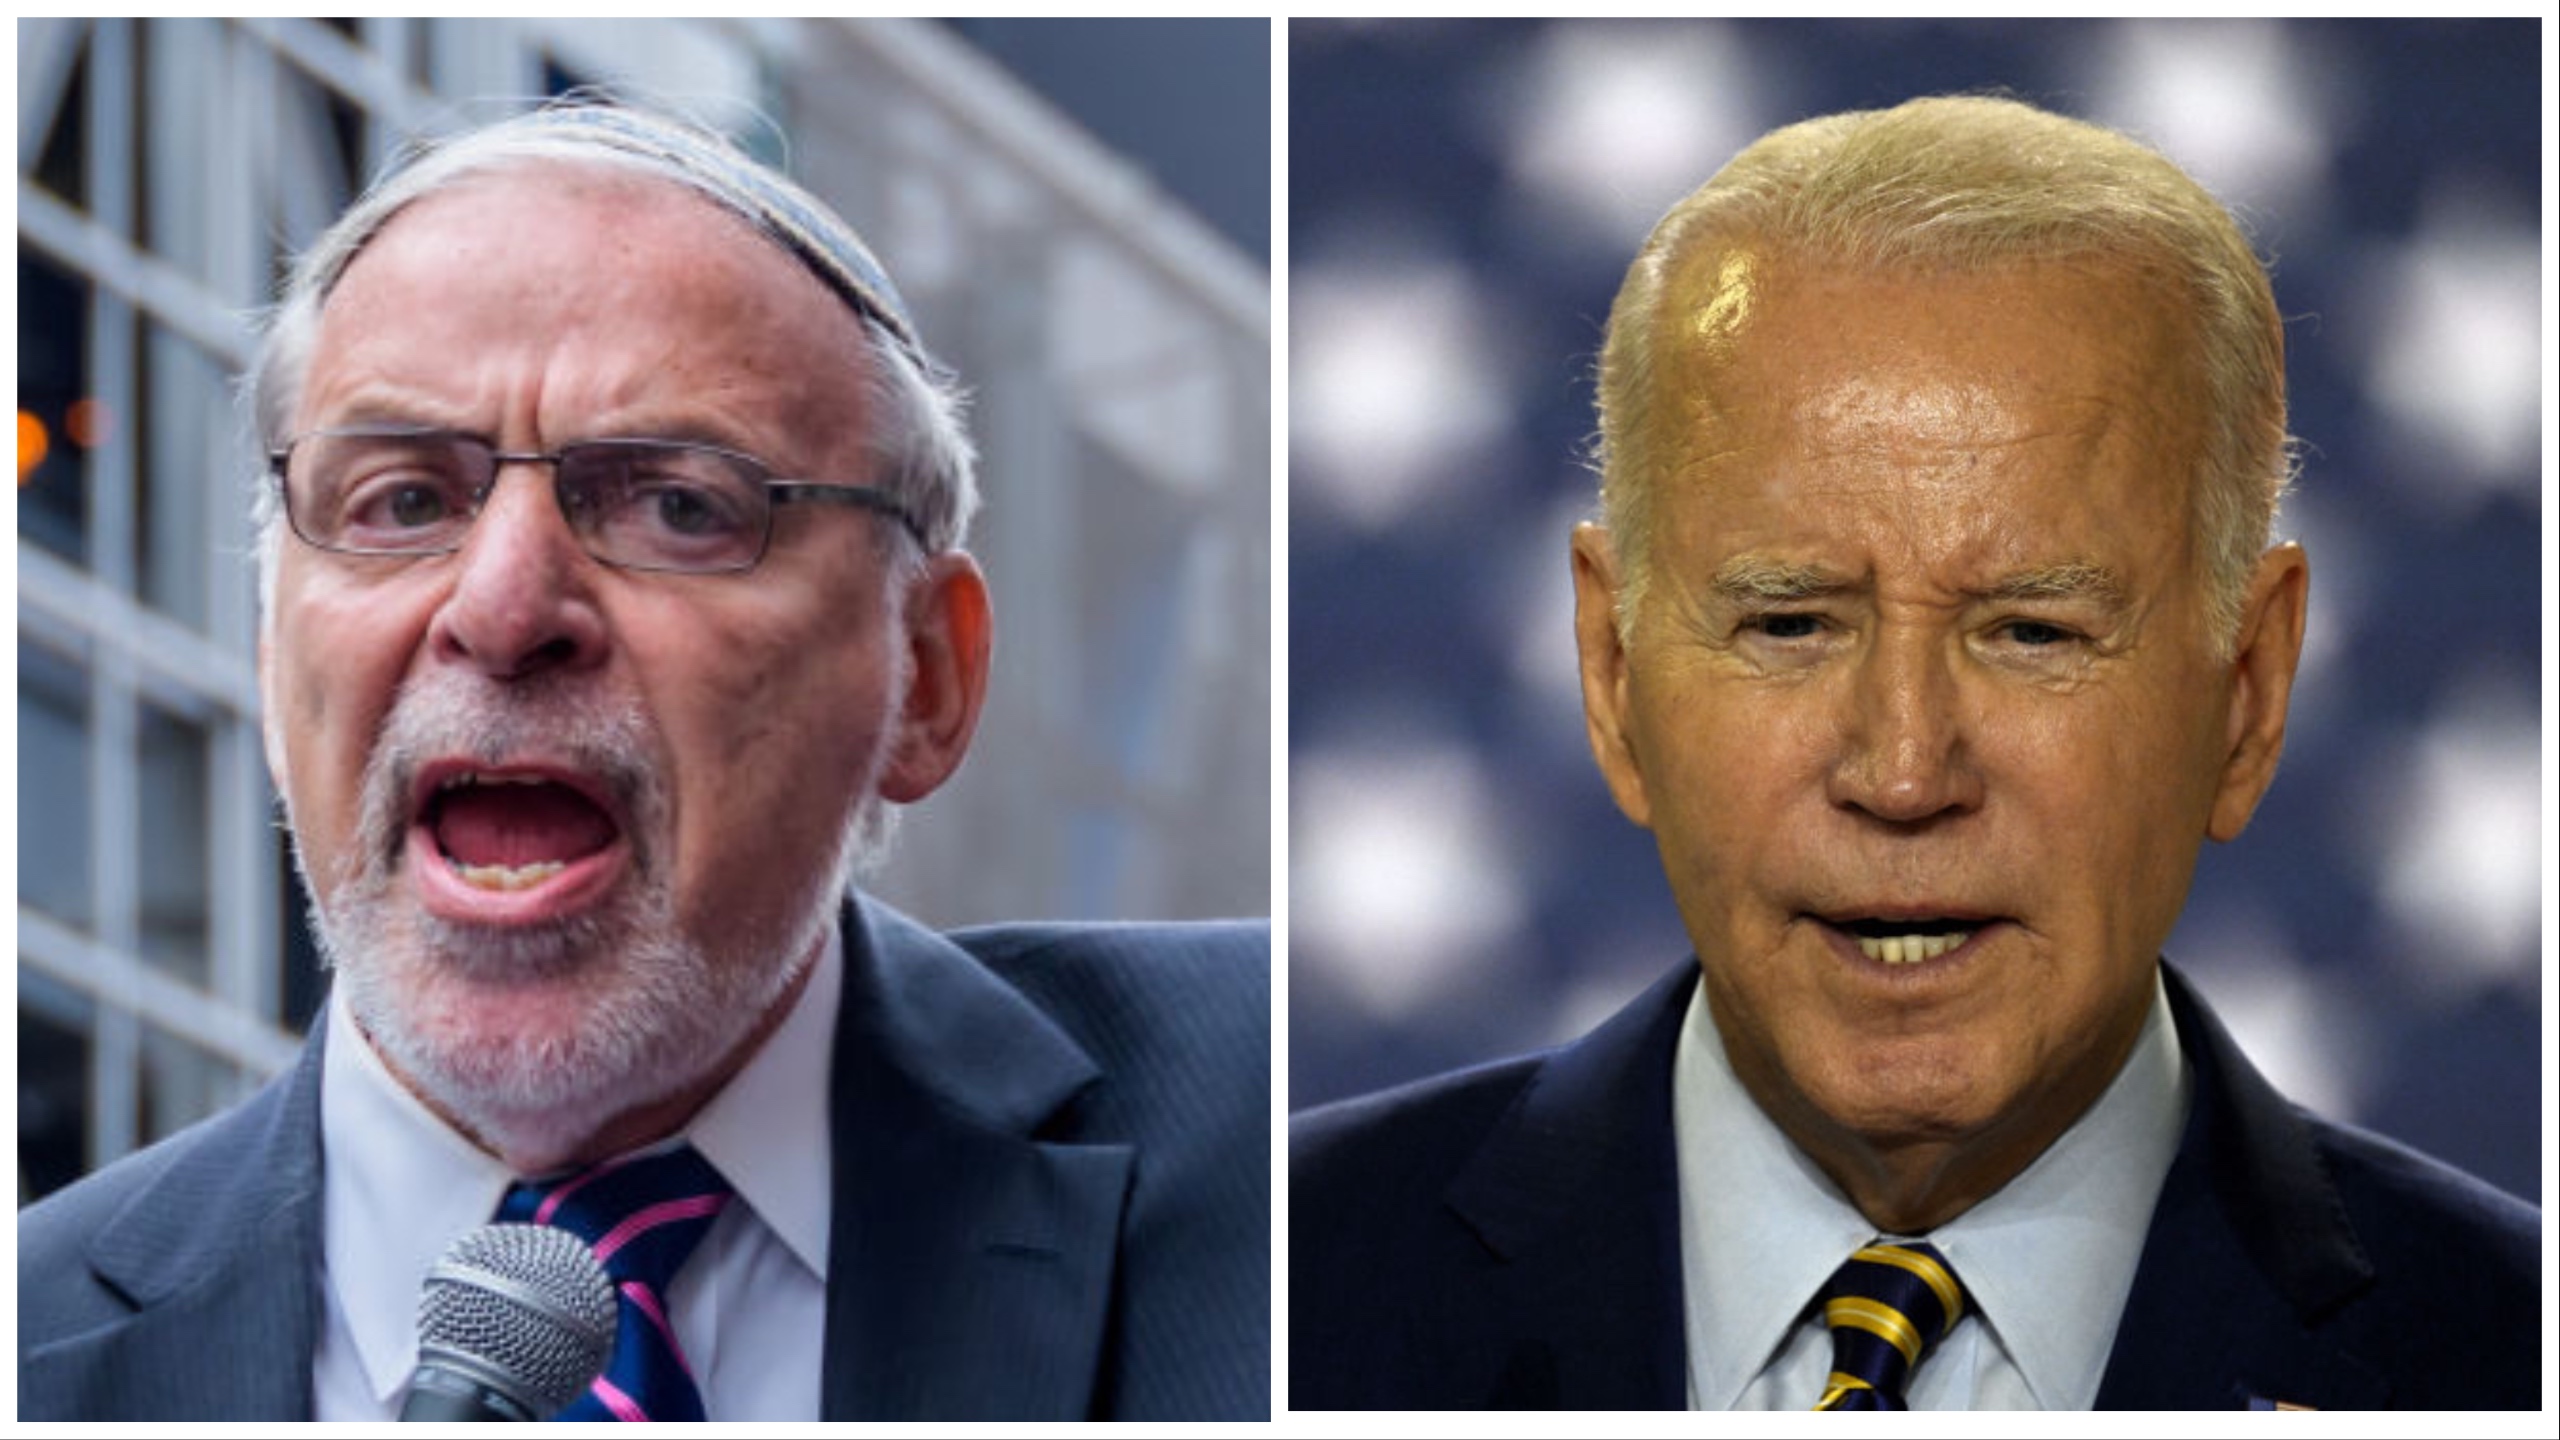 Dov Hikind slams Biden as a “pandering hypocrite” for criticizing Netanyahu’s government.